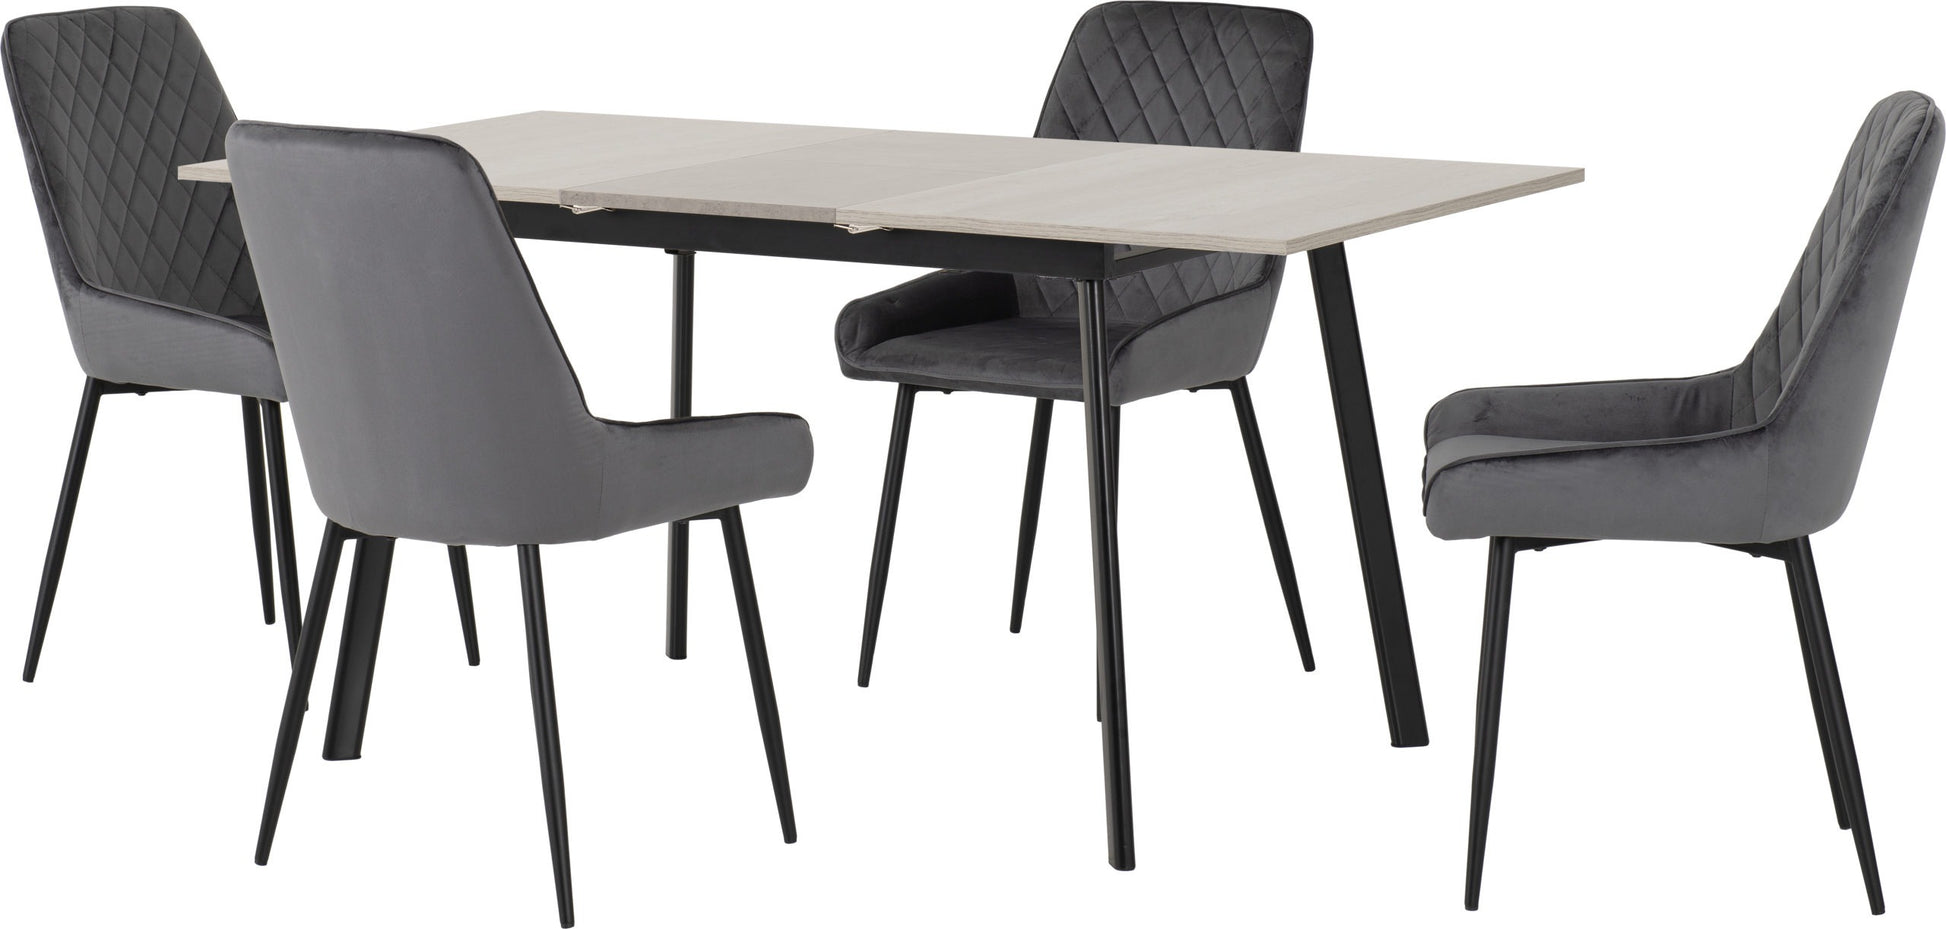 AVERY-EXTENDING-DINING-TABLE-CONCRETEGREY-OAK-EFFECT-2021-400-403-055-05.jpg